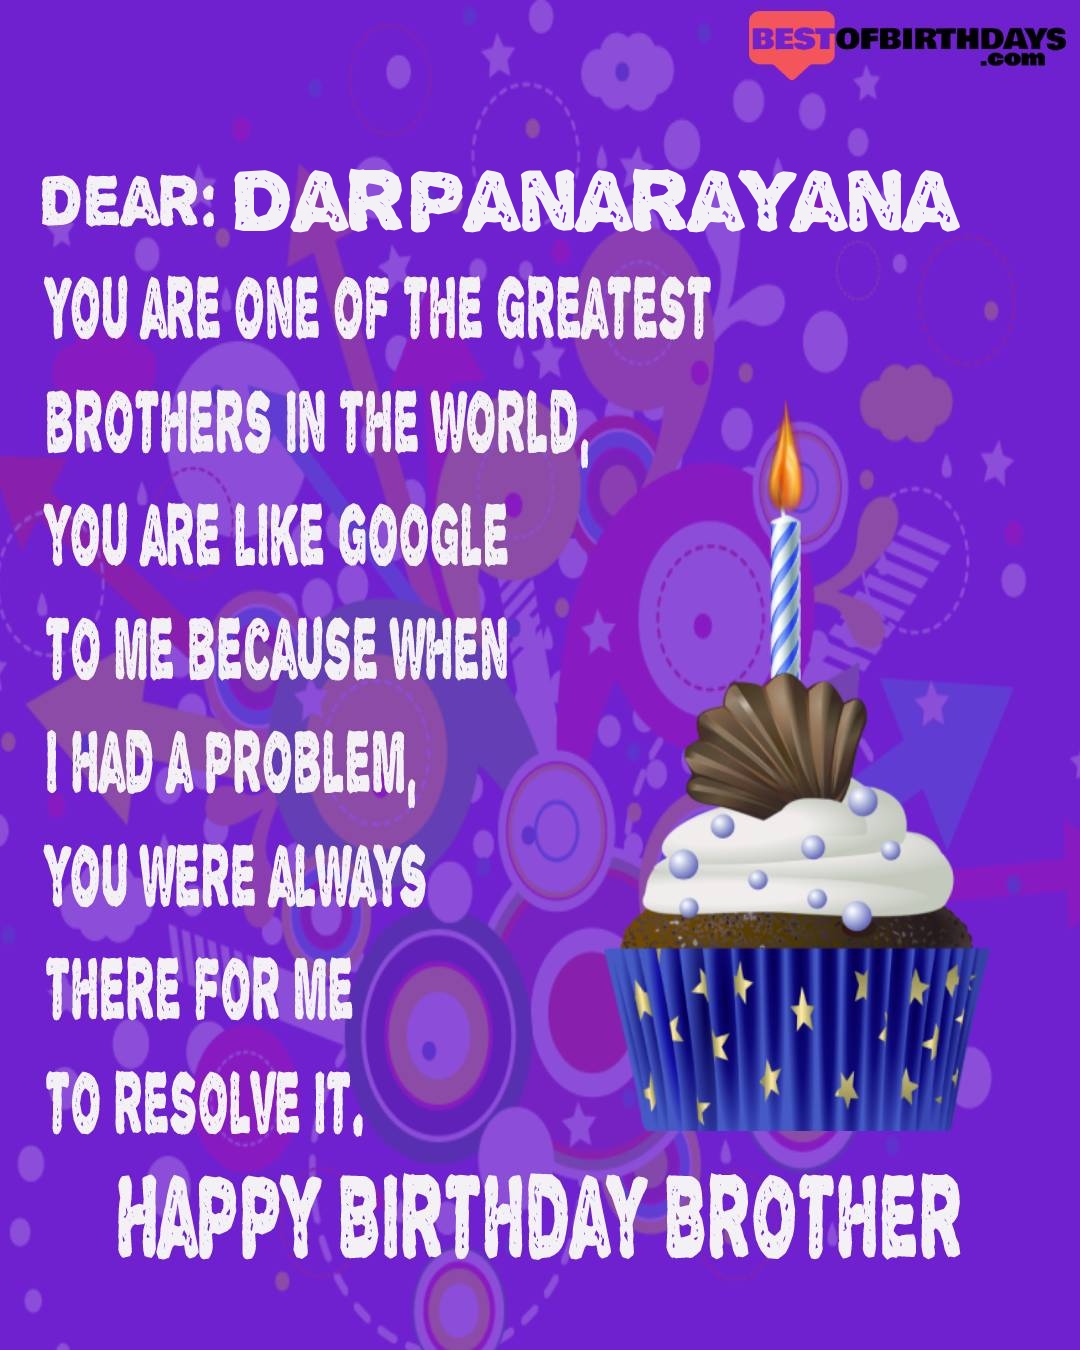 Happy birthday darpanarayana bhai brother bro